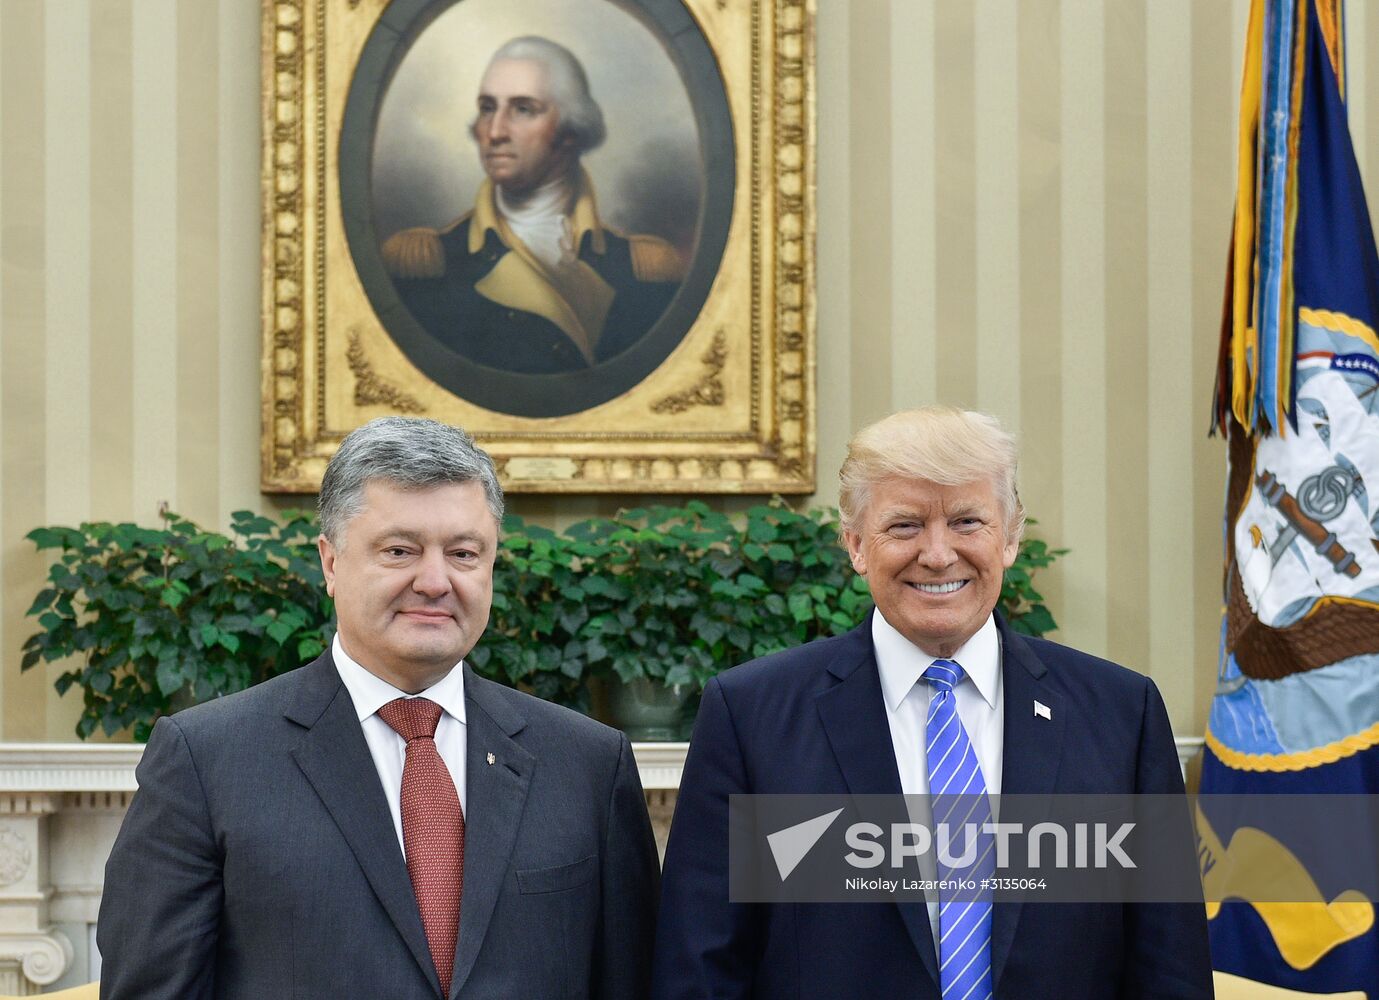 Ukrainian President Poroshenko's visit to the USA